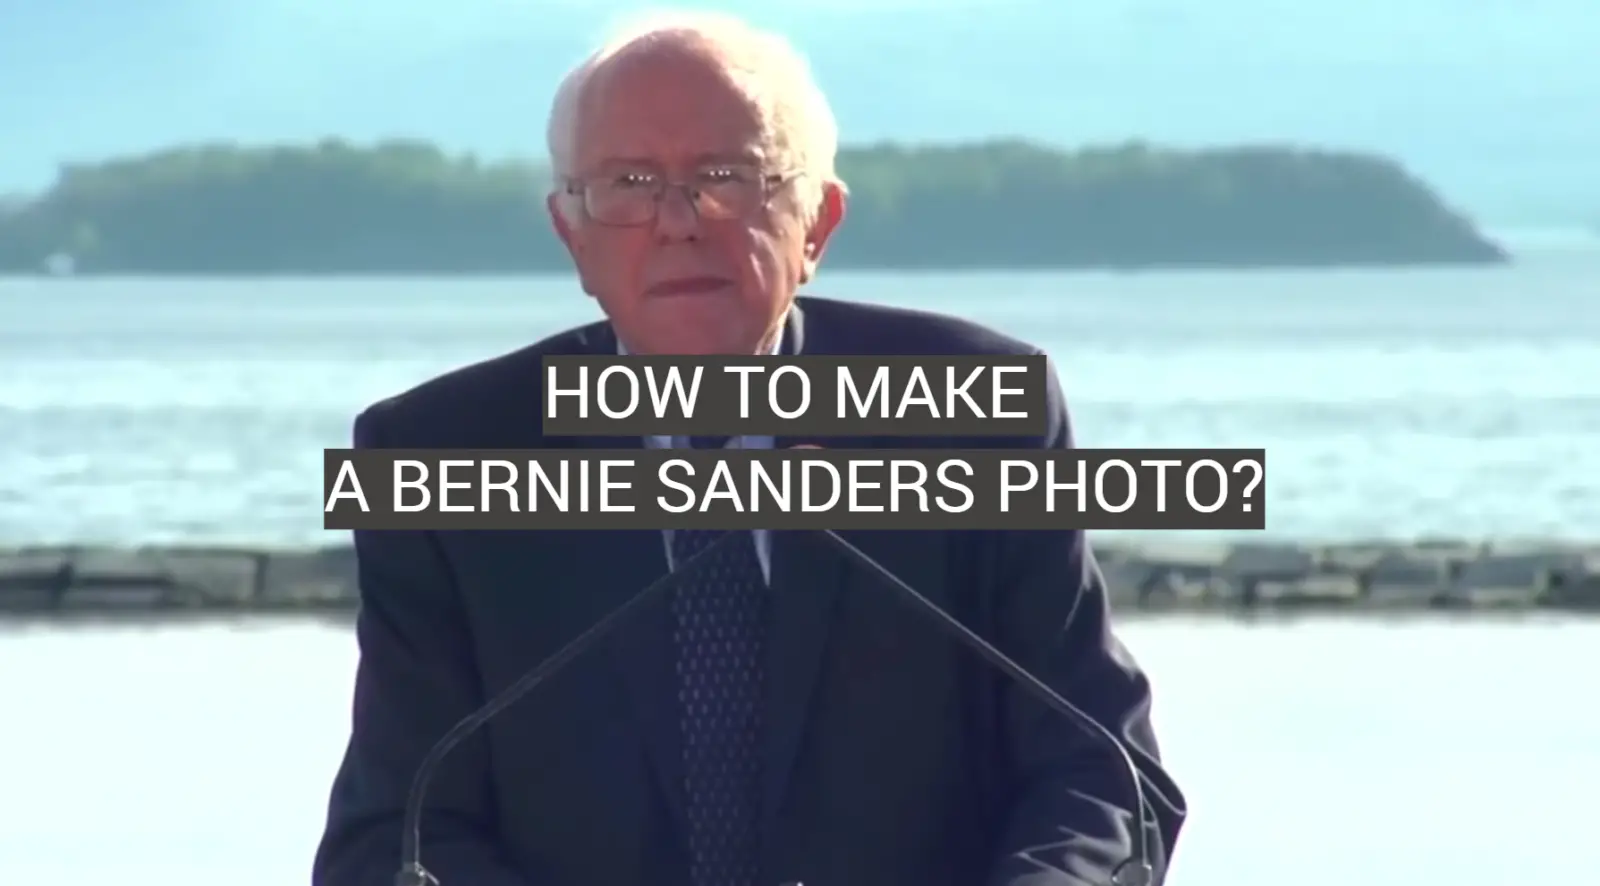 How to Make a Bernie Sanders Photo?